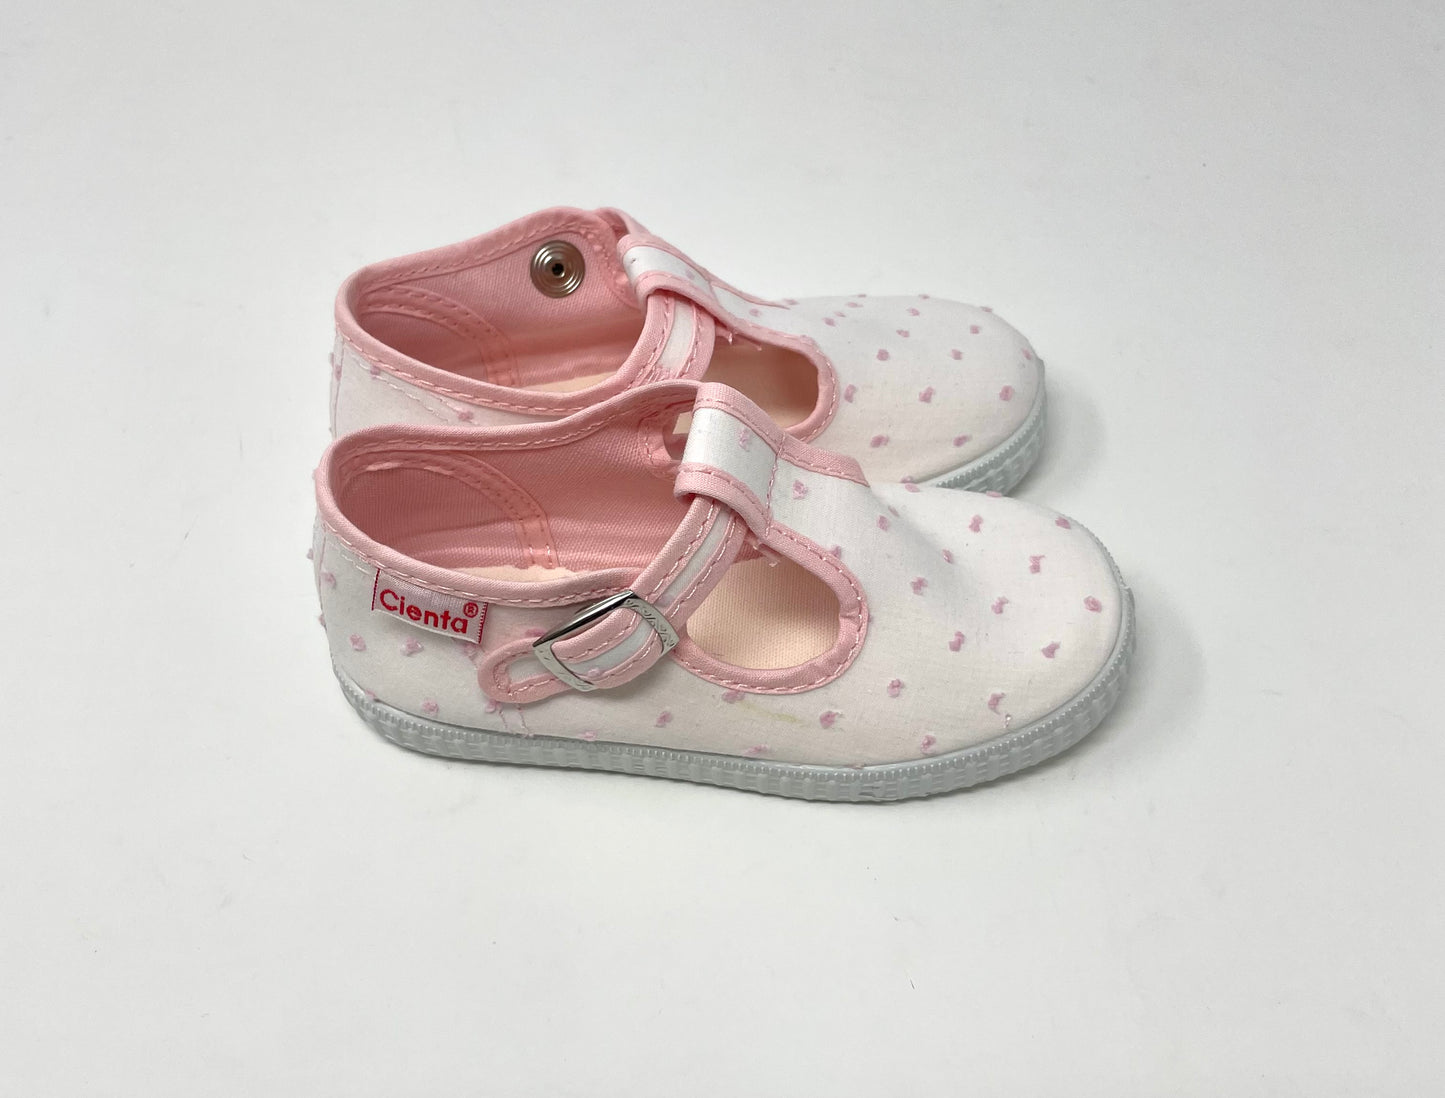 Toddler T-Strap - Pink Swiss Dot Shoes Cienta   